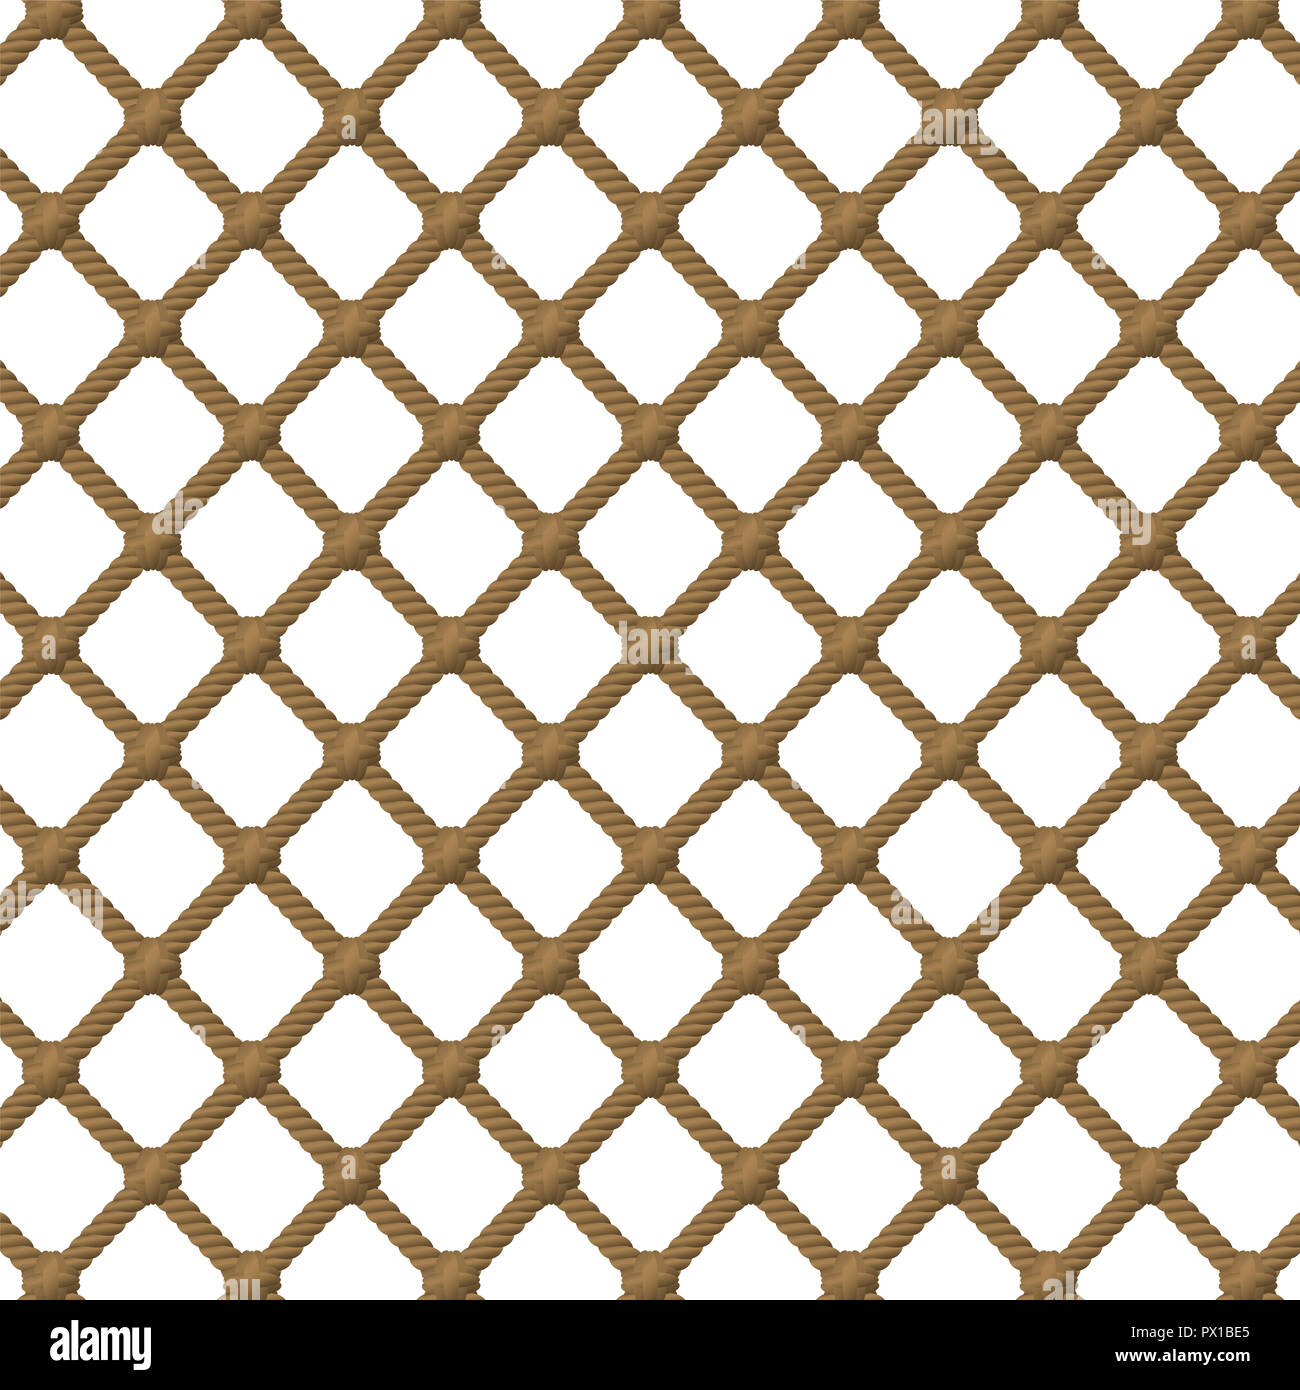 Rope net pattern - illustration on white background Stock Photo